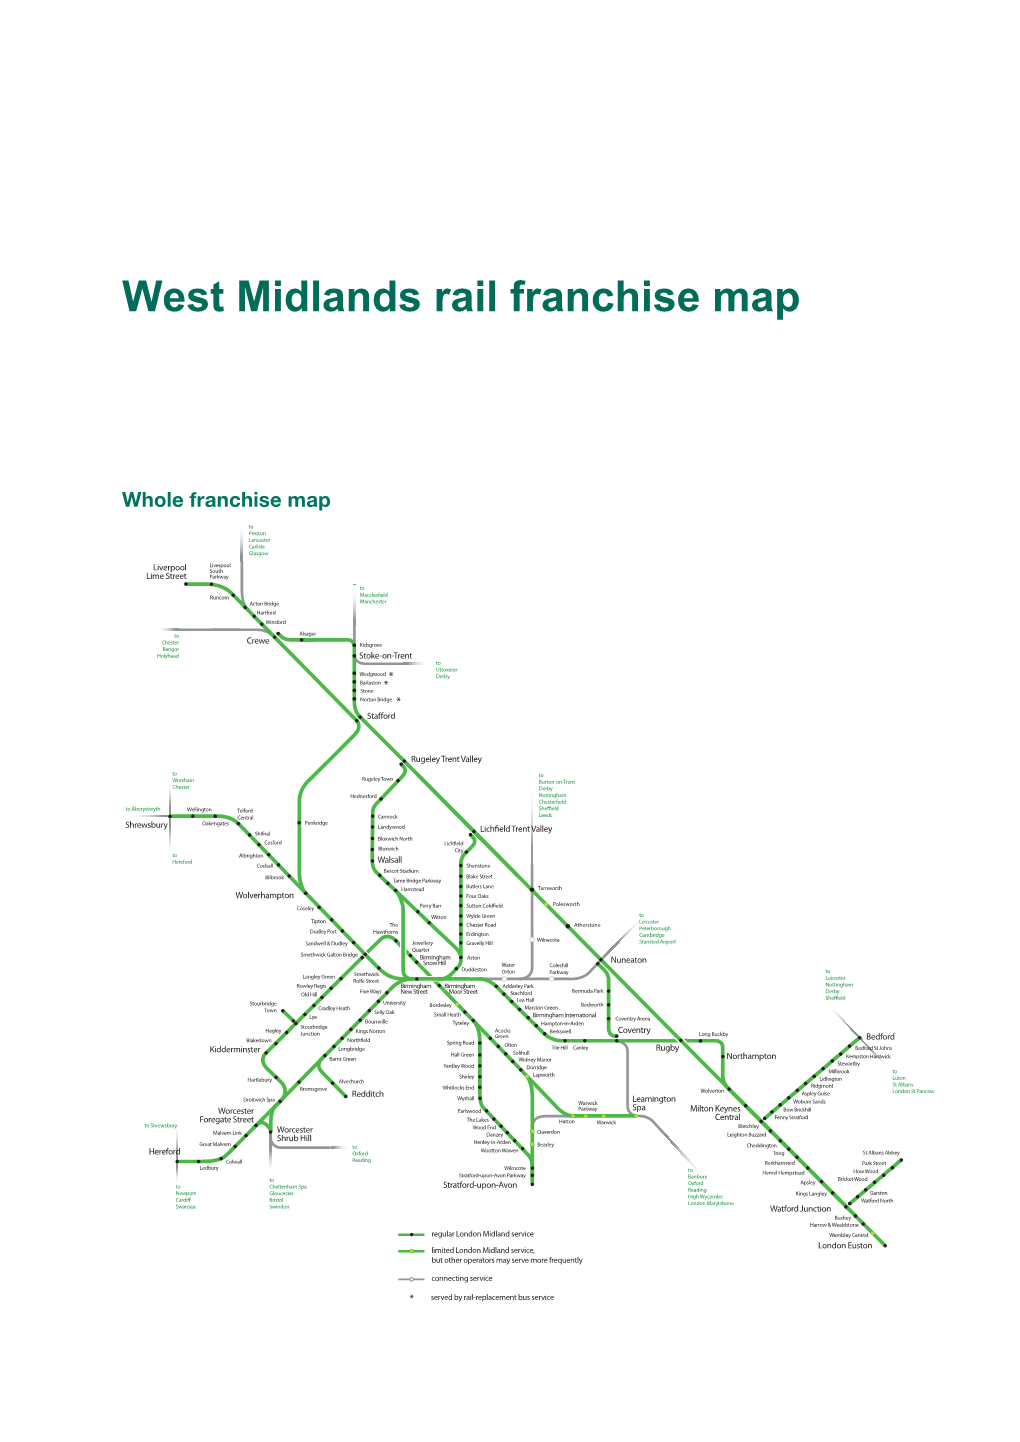 West Midlands Rail Franchise Consultation